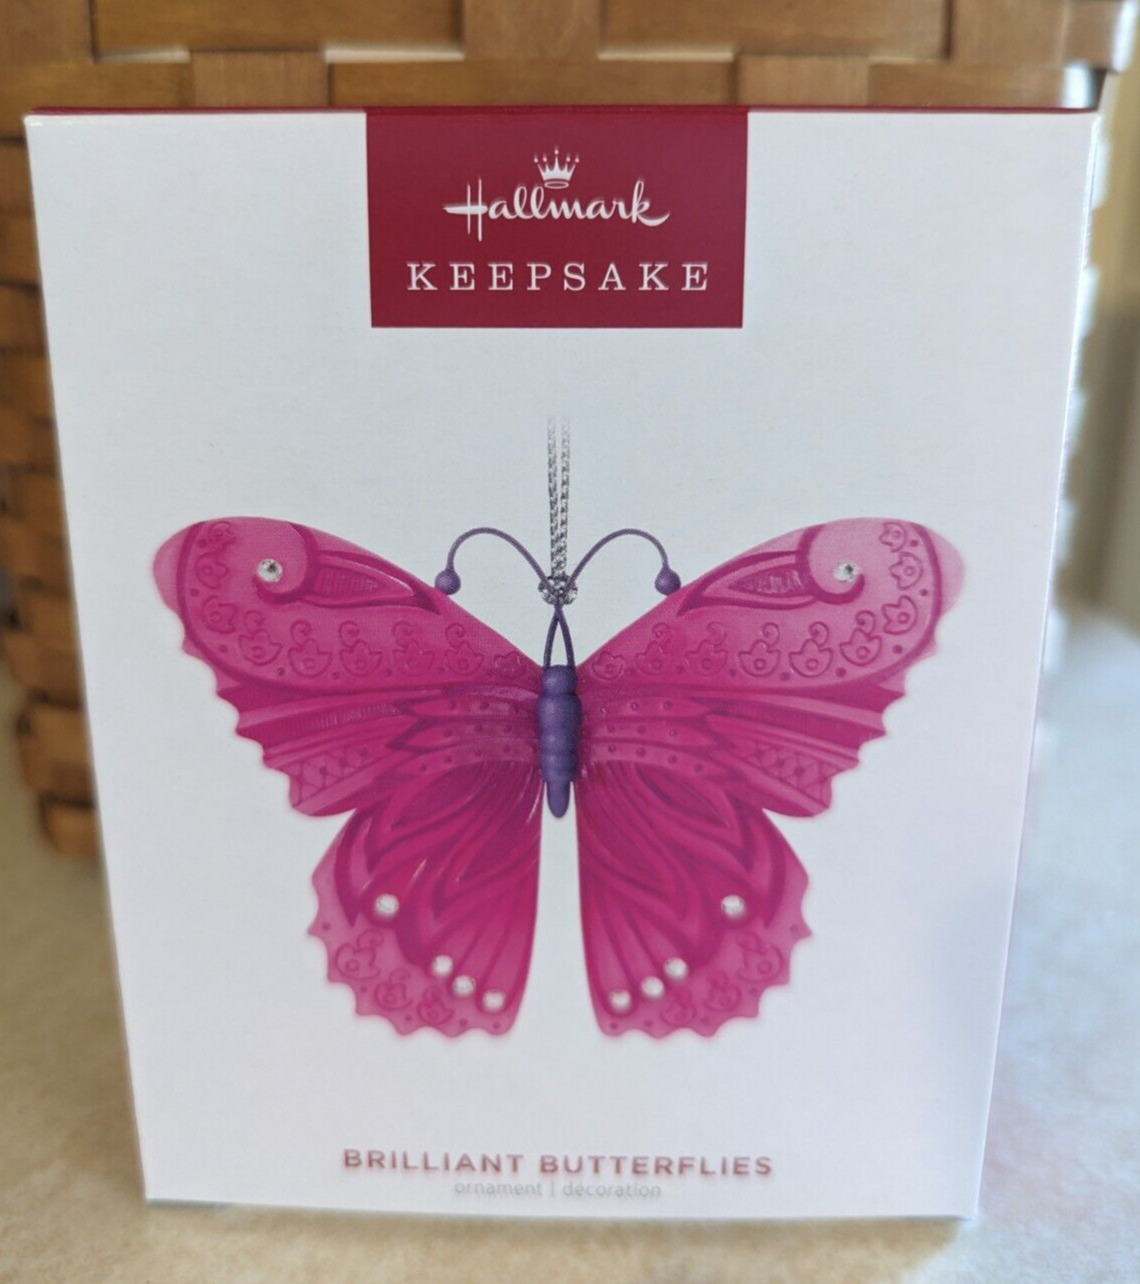 2023 Hallmark Keepsake BRILLIANT BUTTERFLIES 7th in Series Ornament